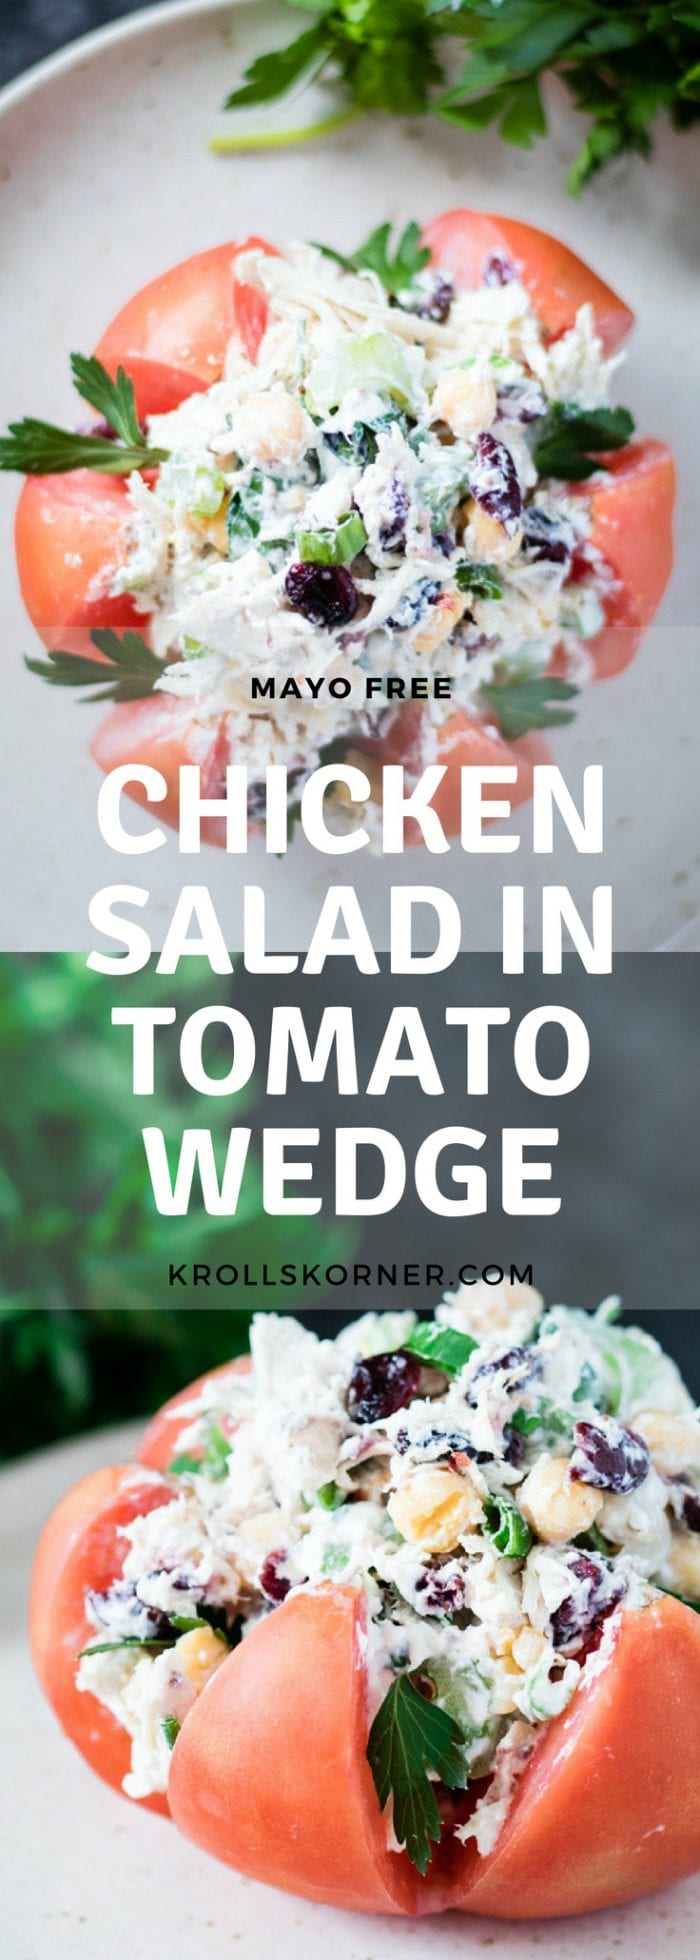 Mayo-Free Chicken Salad in Tomato Wedge - Kroll's Korner